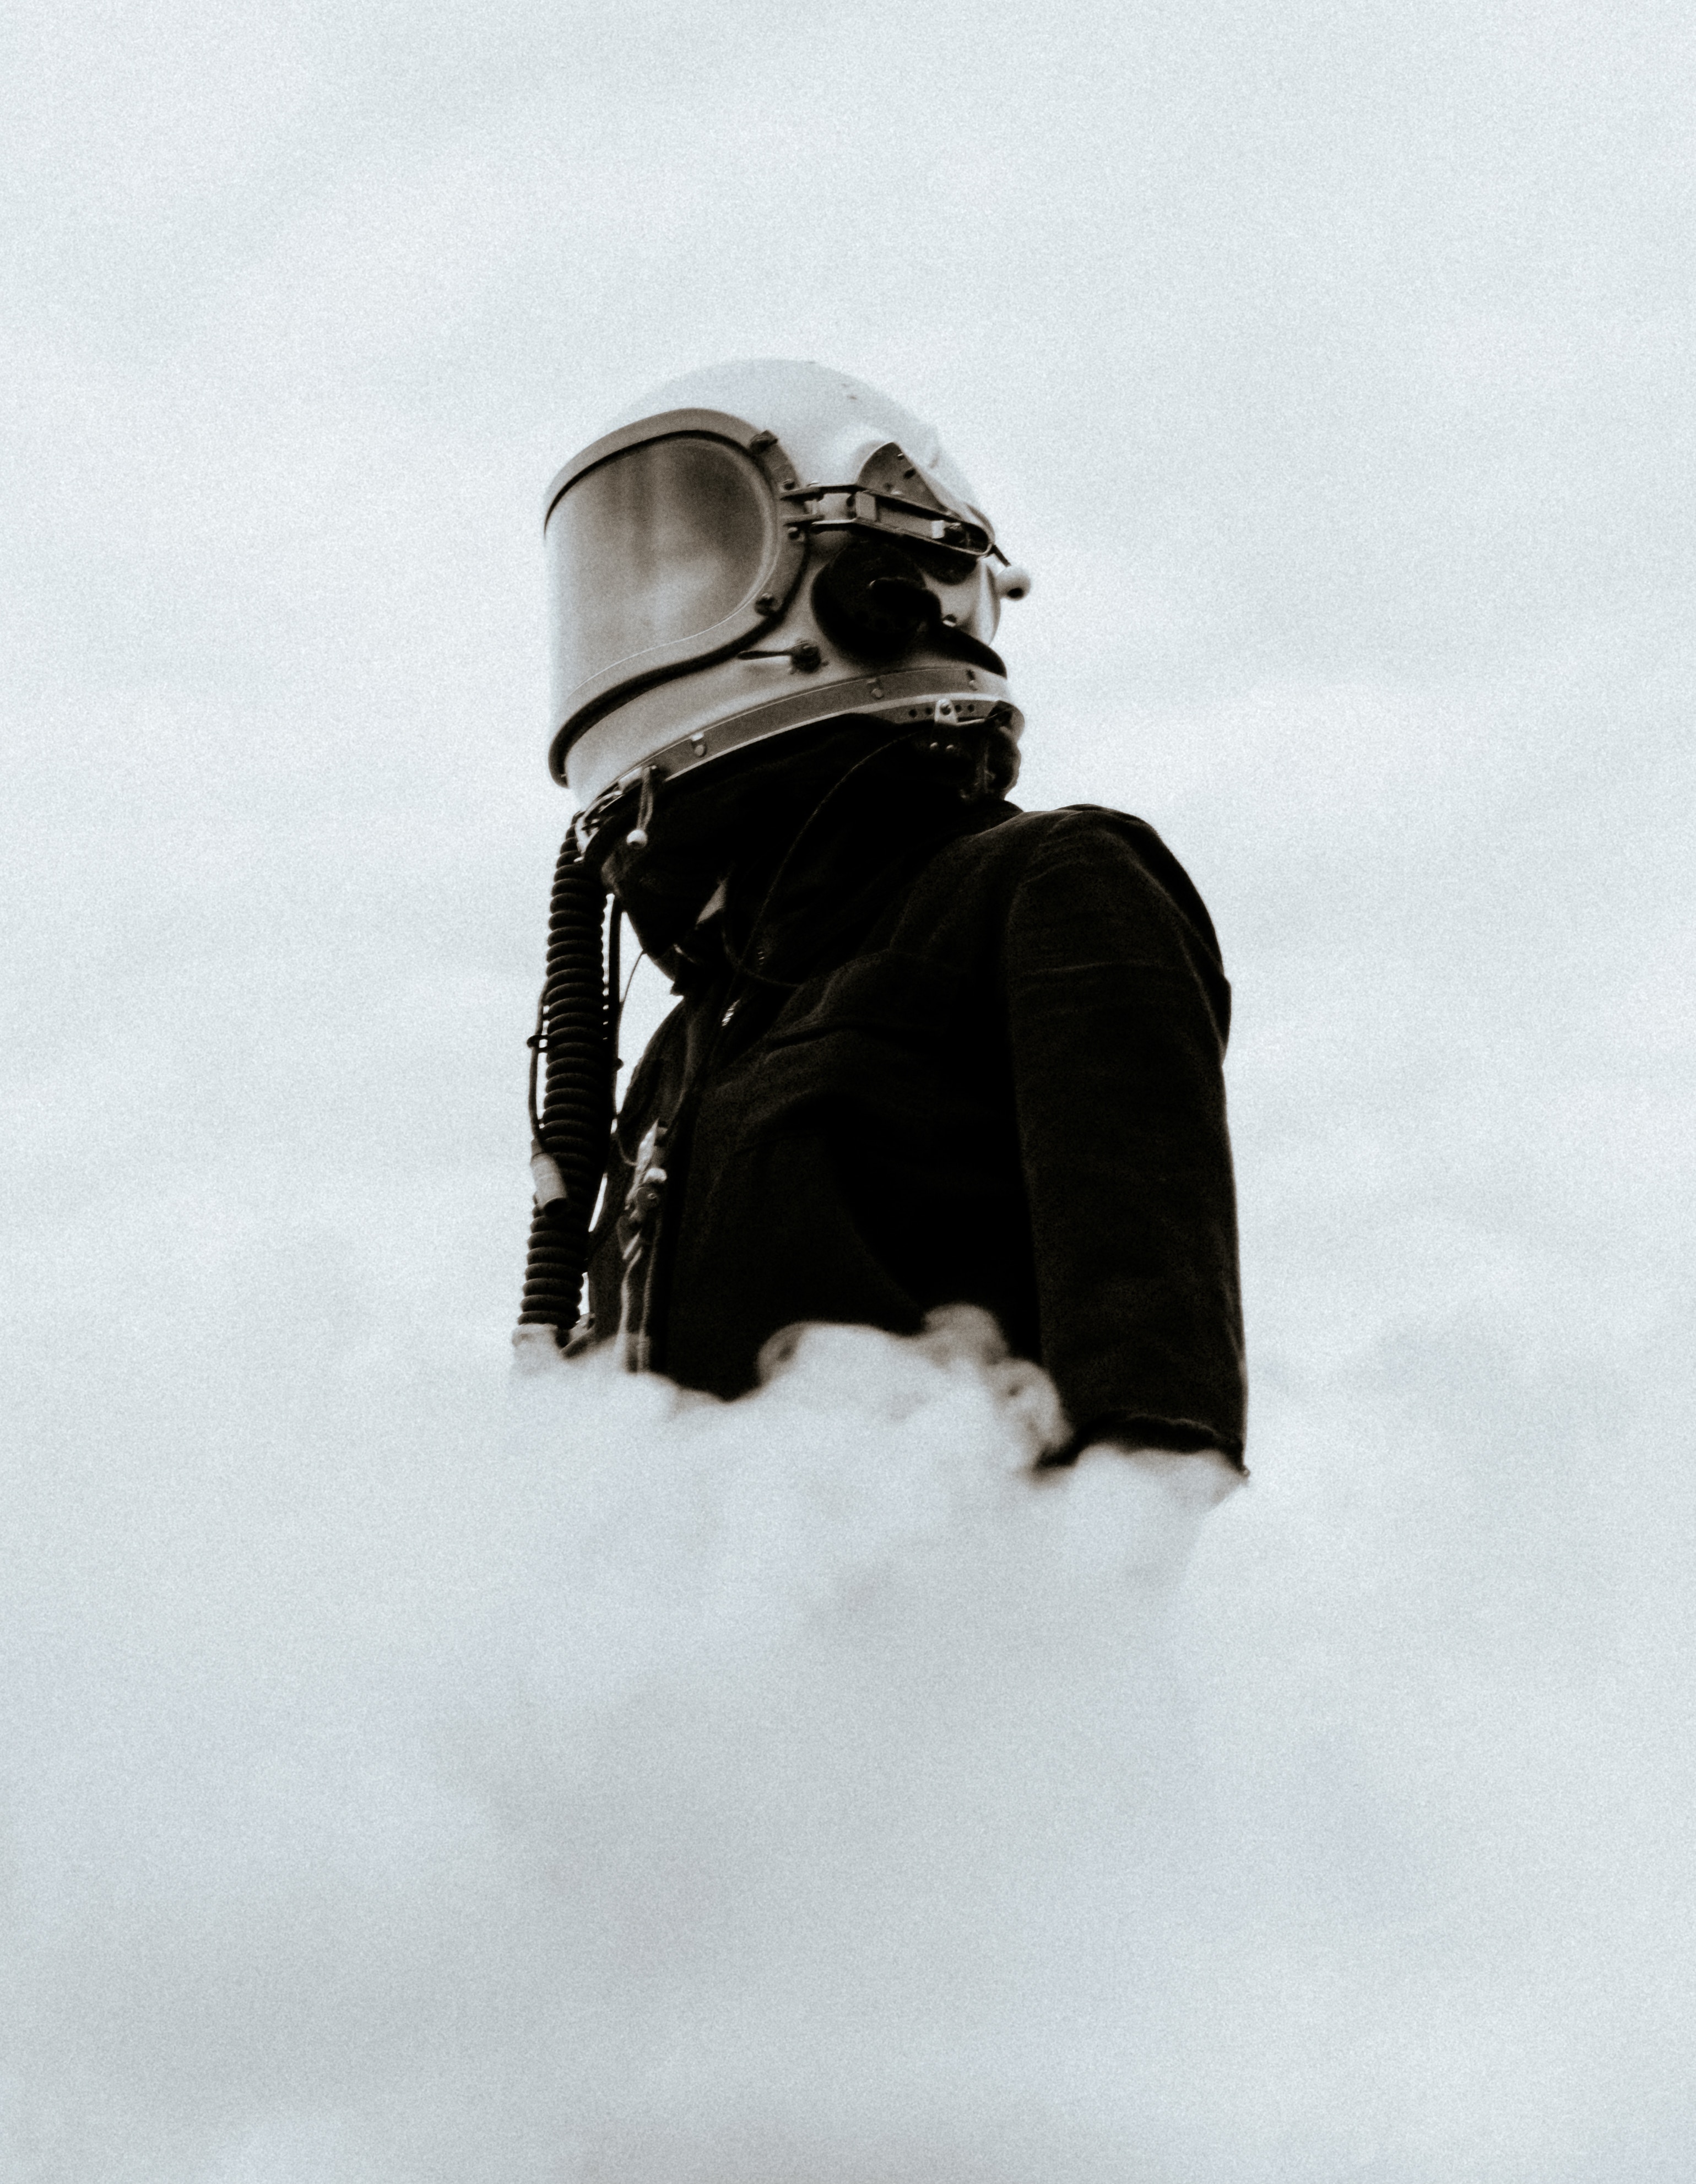 shroud, smoke, miscellanea, miscellaneous, mask, helmet